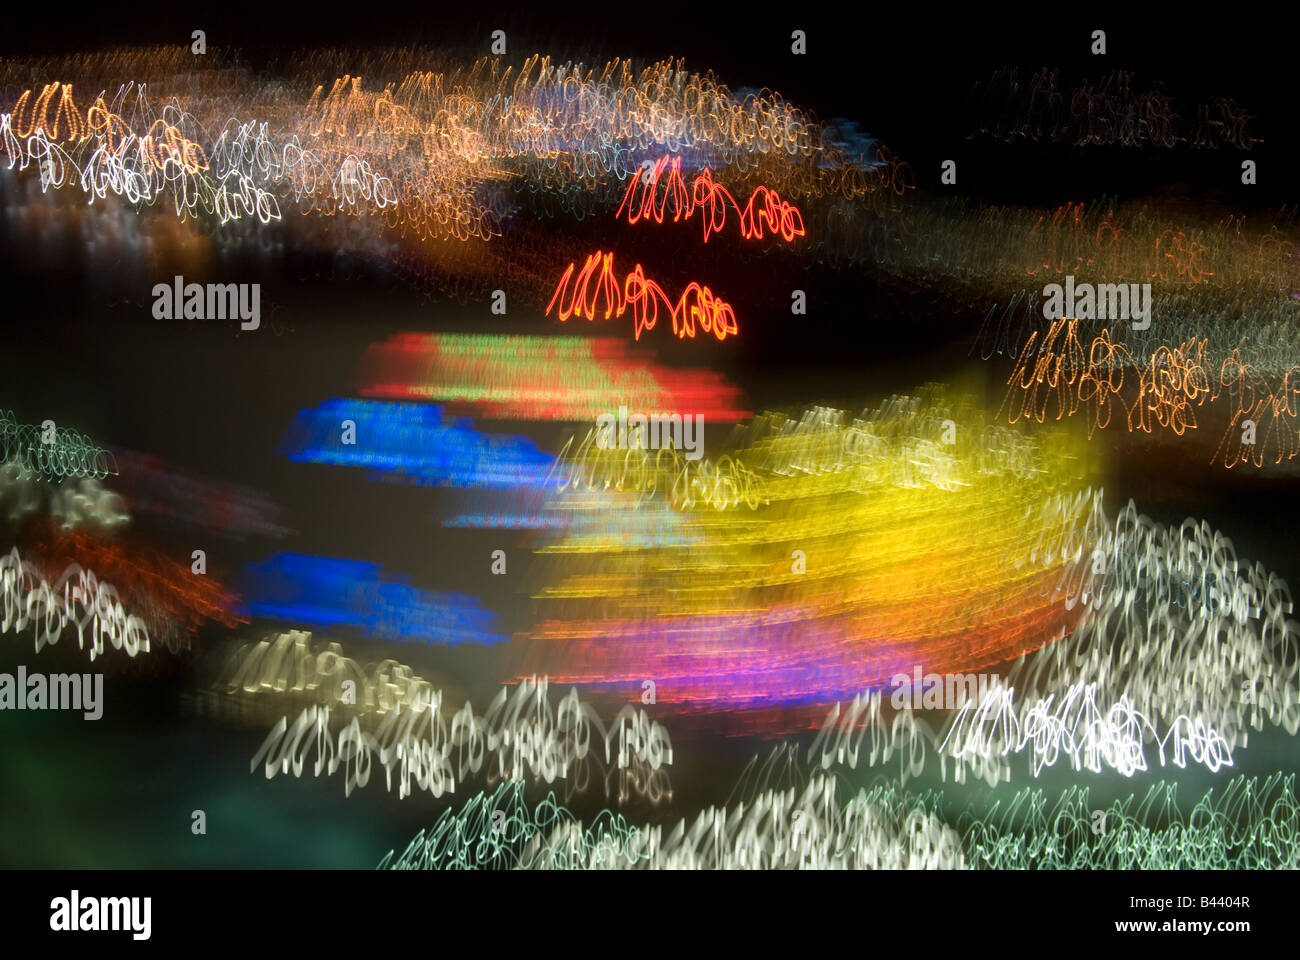 Blurred colored fast moving lights in Miami night scene. Stock Photo